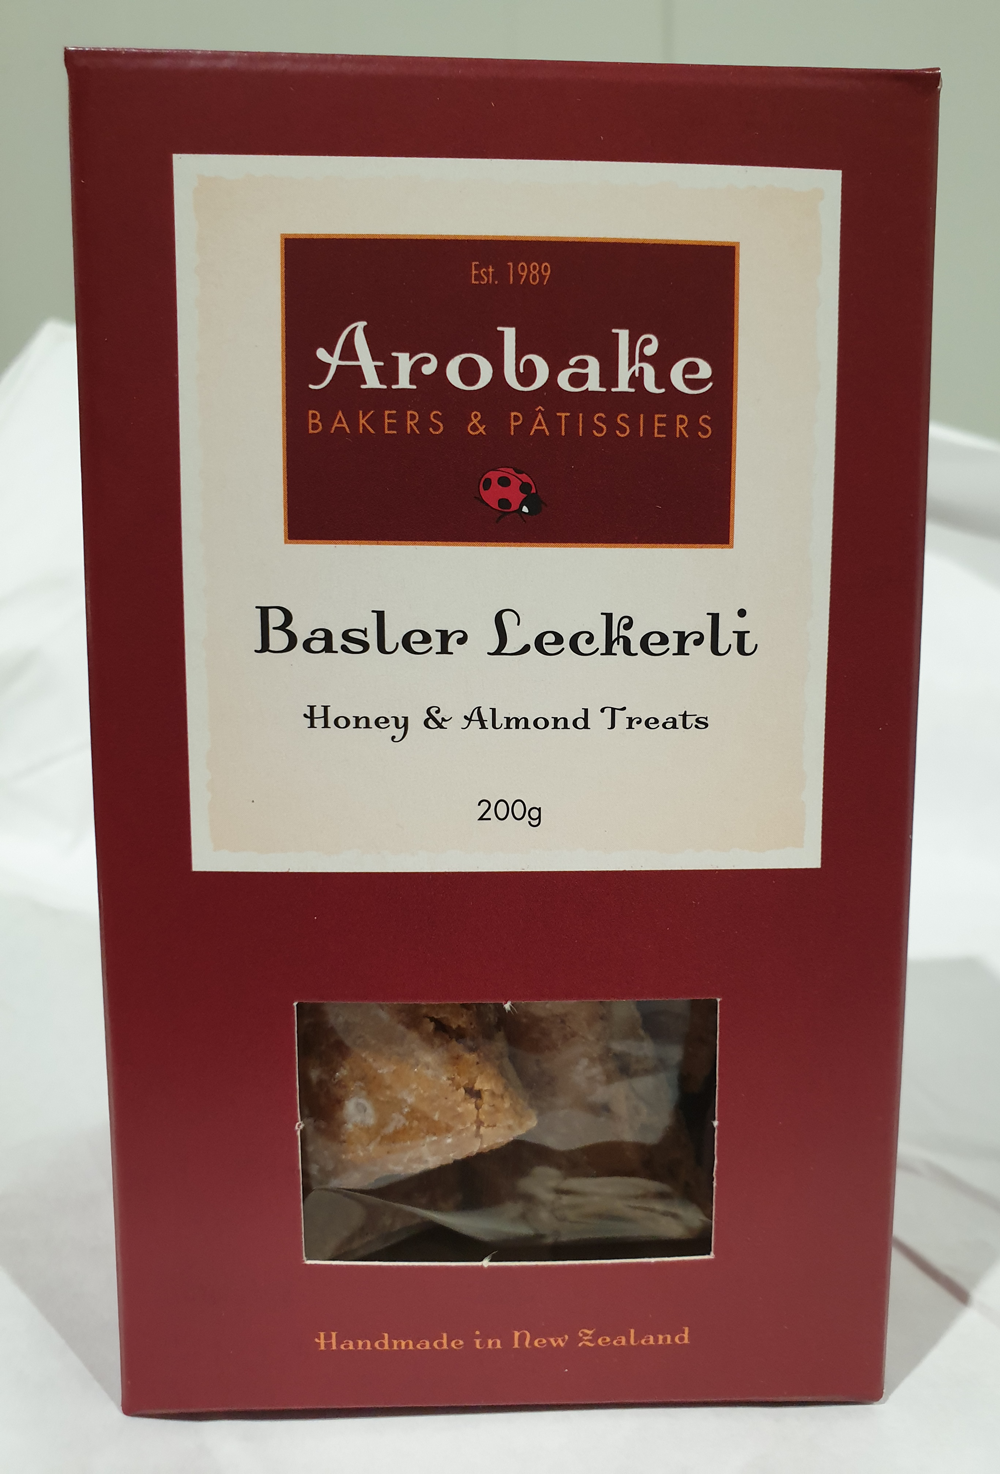 A box of Arobake brand Basler Leckerli Biscuits (200g)